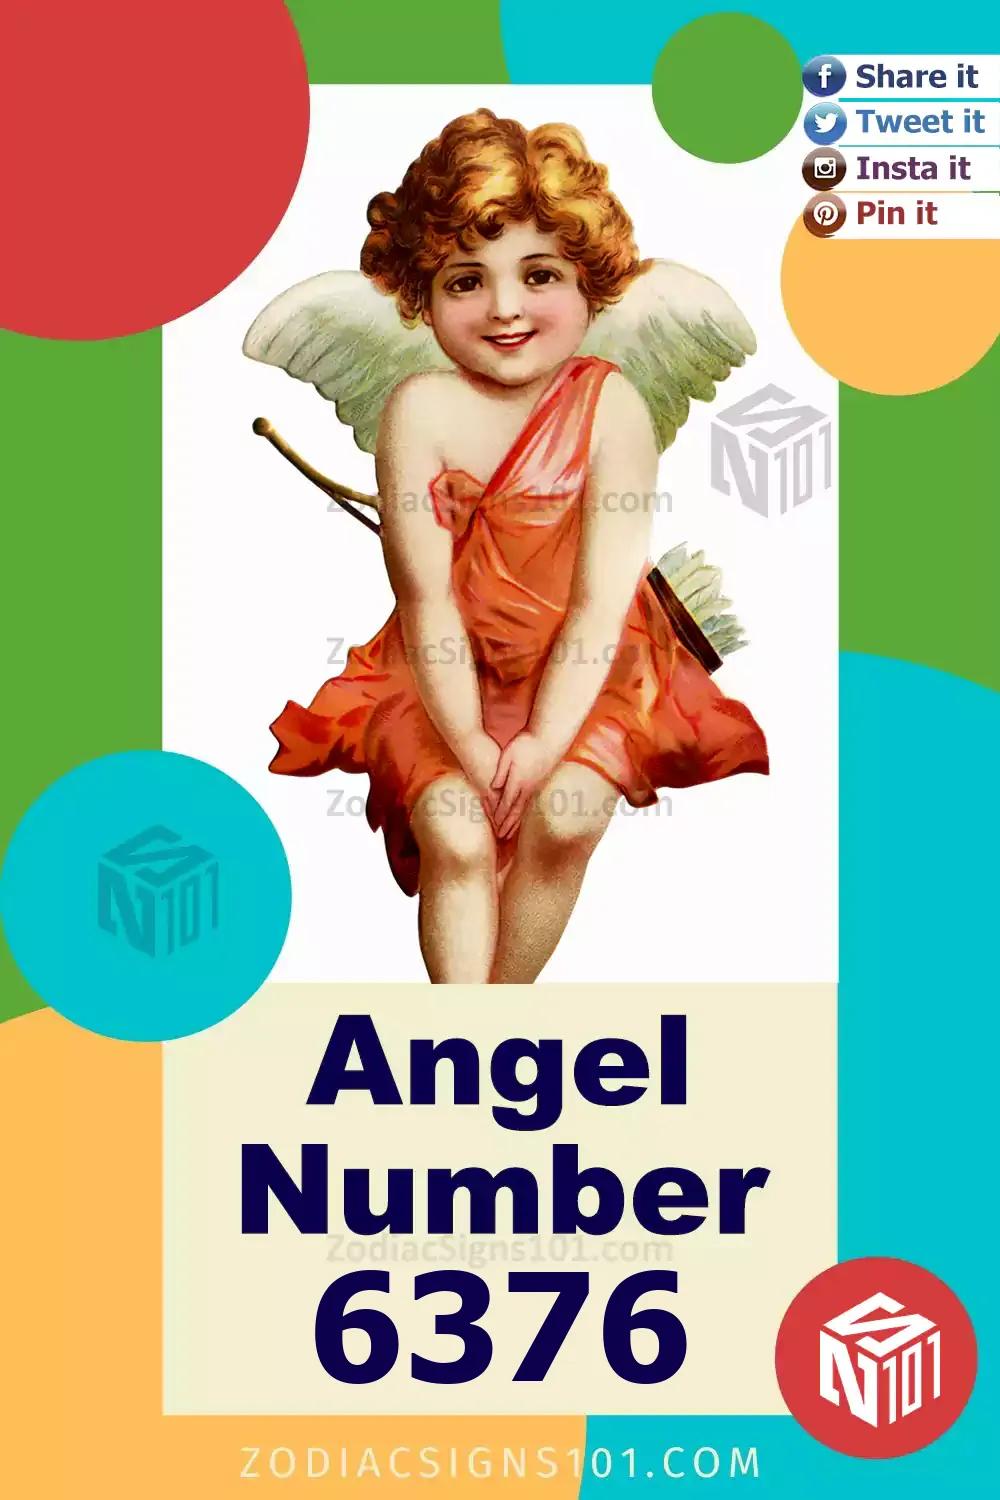 6376-Angel-Number-Meaning.jpg